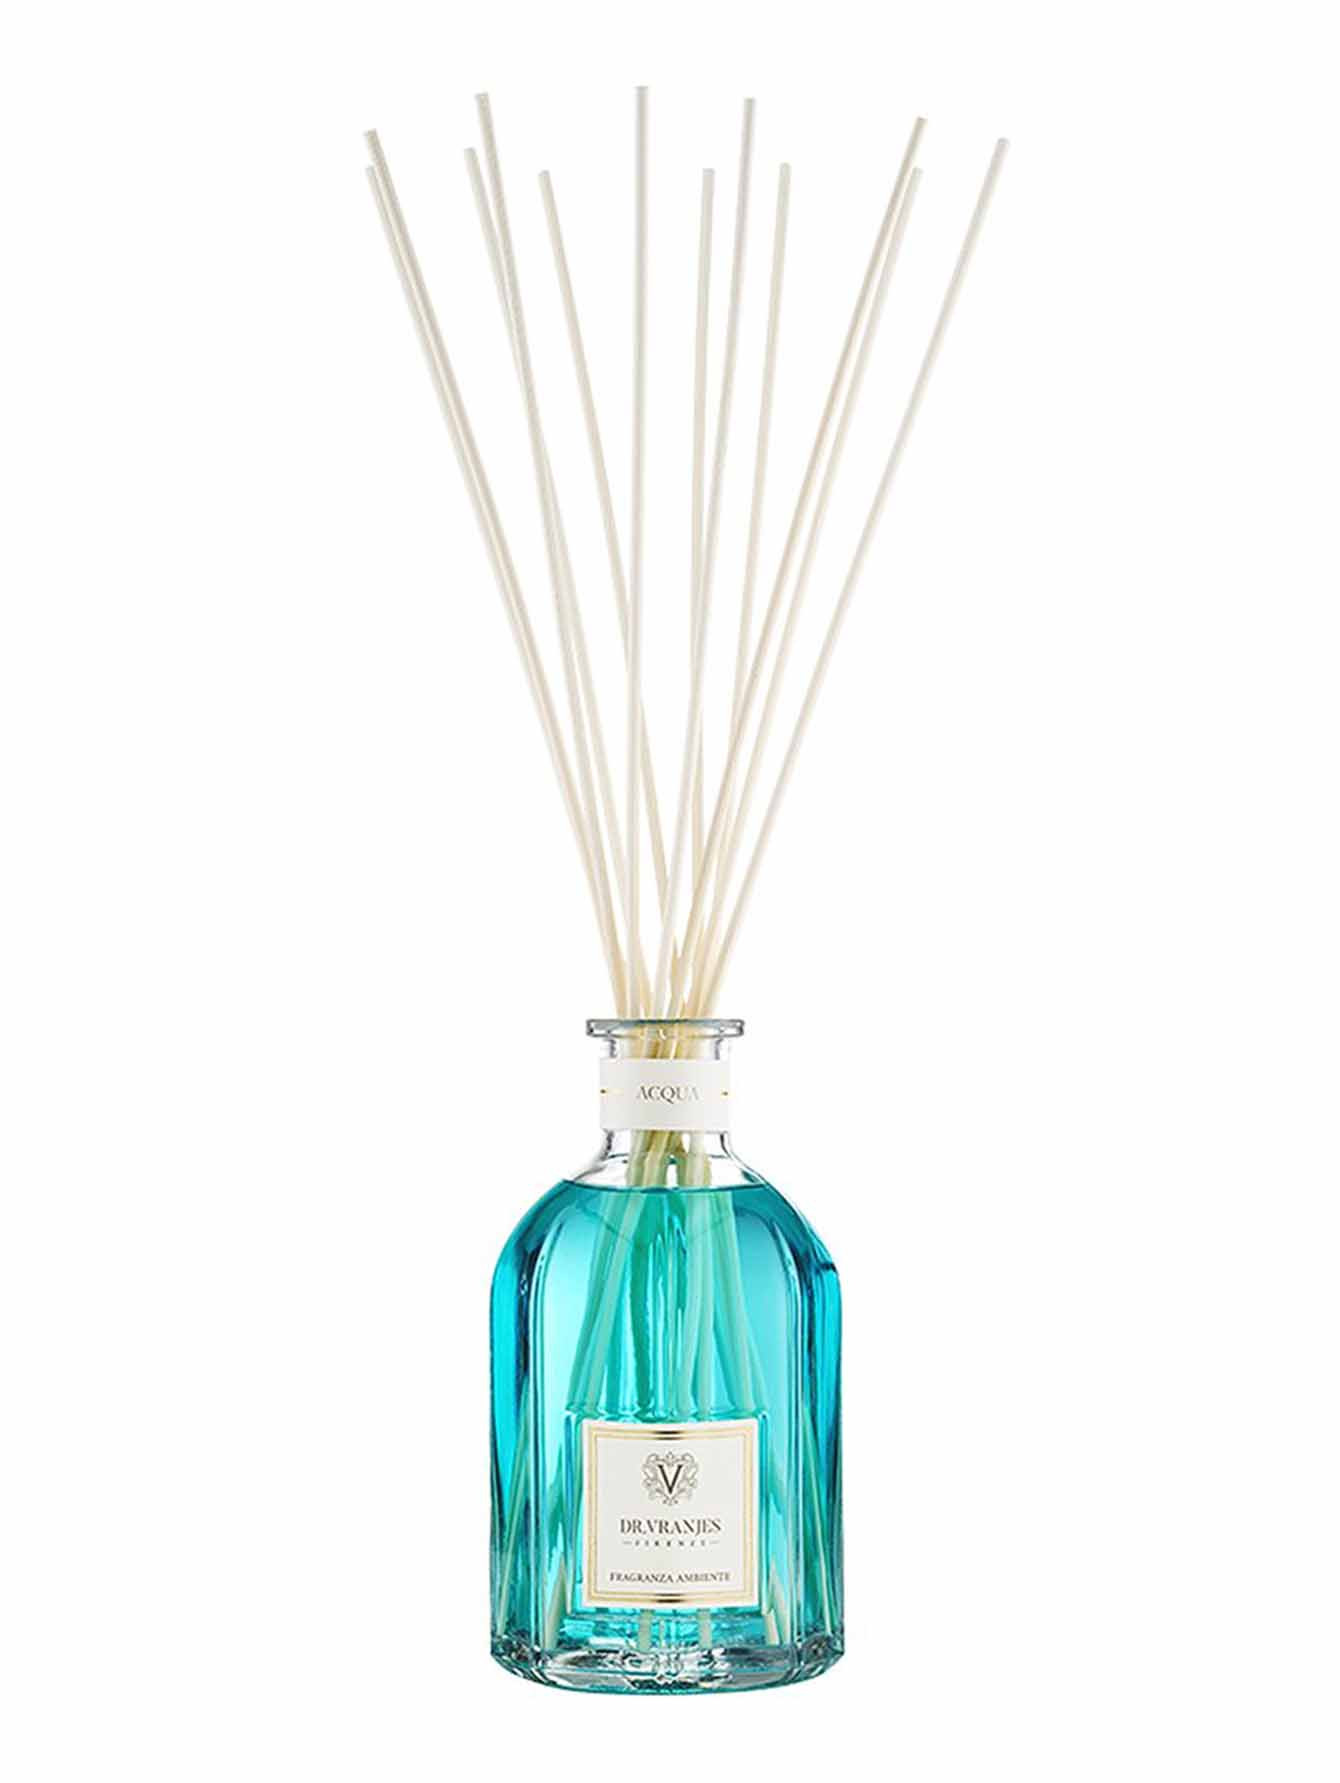 Ароматизатор - Acqua , Home Fragrance, 500ml - Общий вид